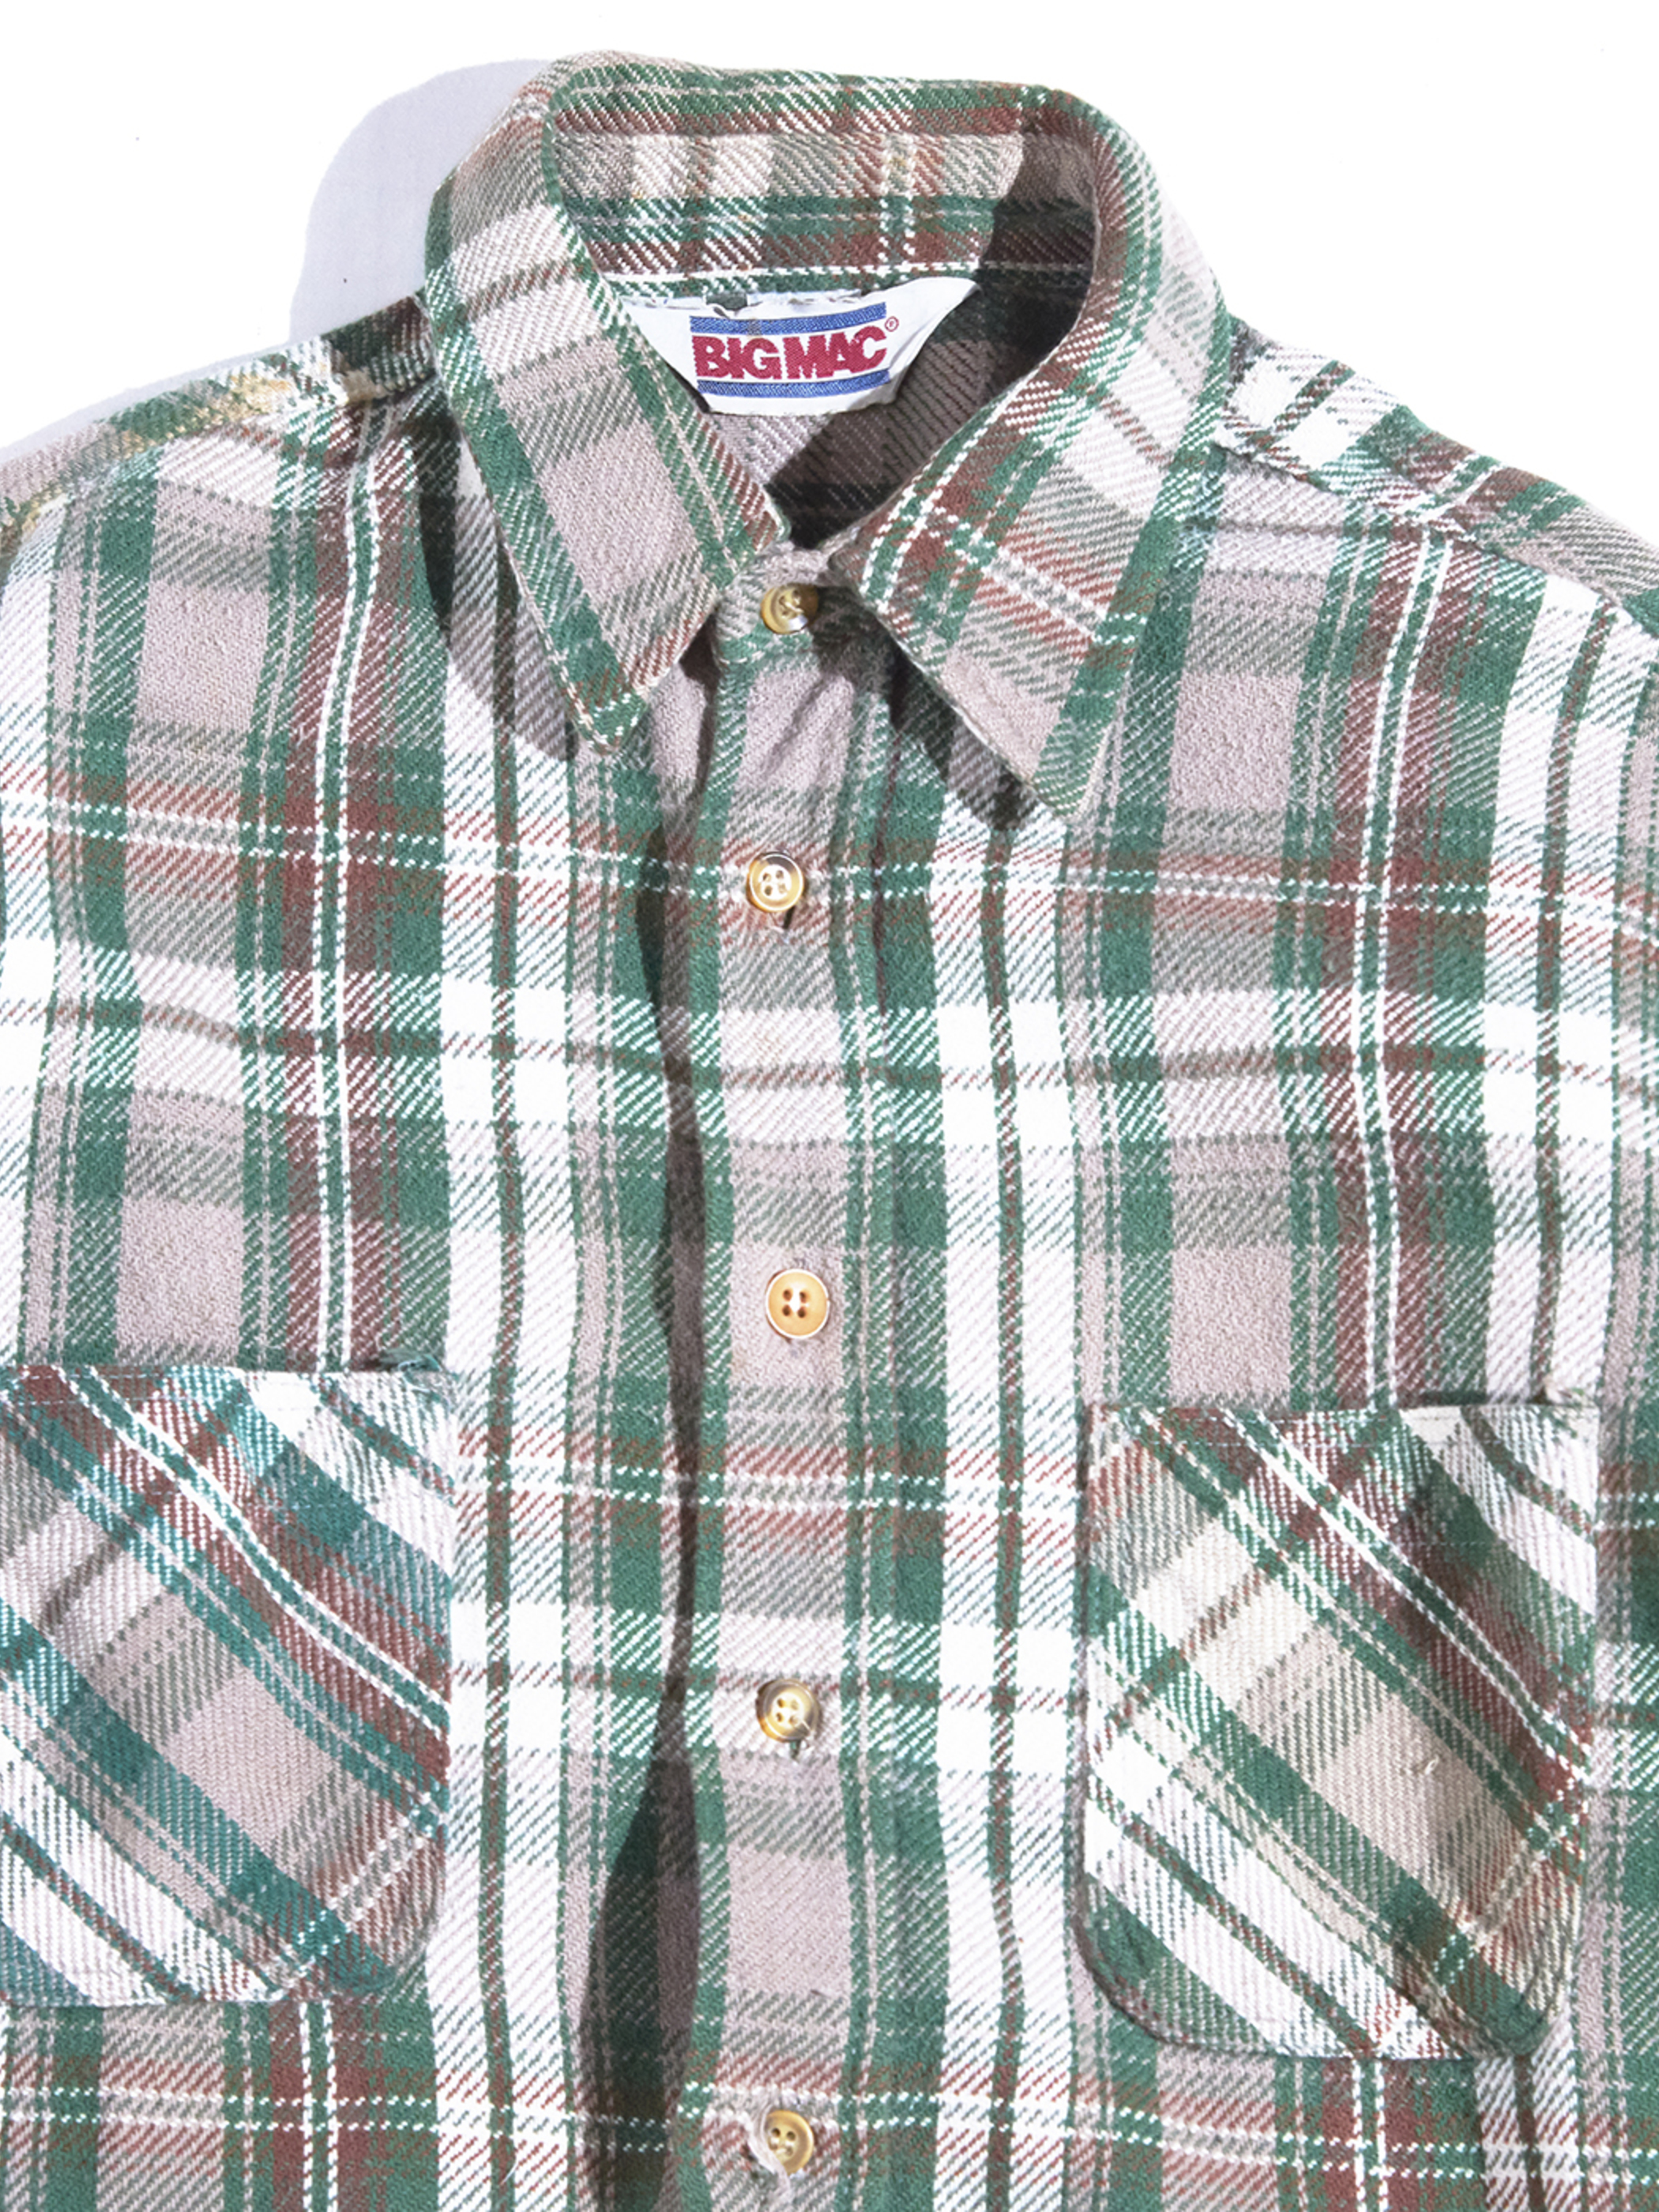 1980s "BIG MAC" flannel check shirt -GREEN-